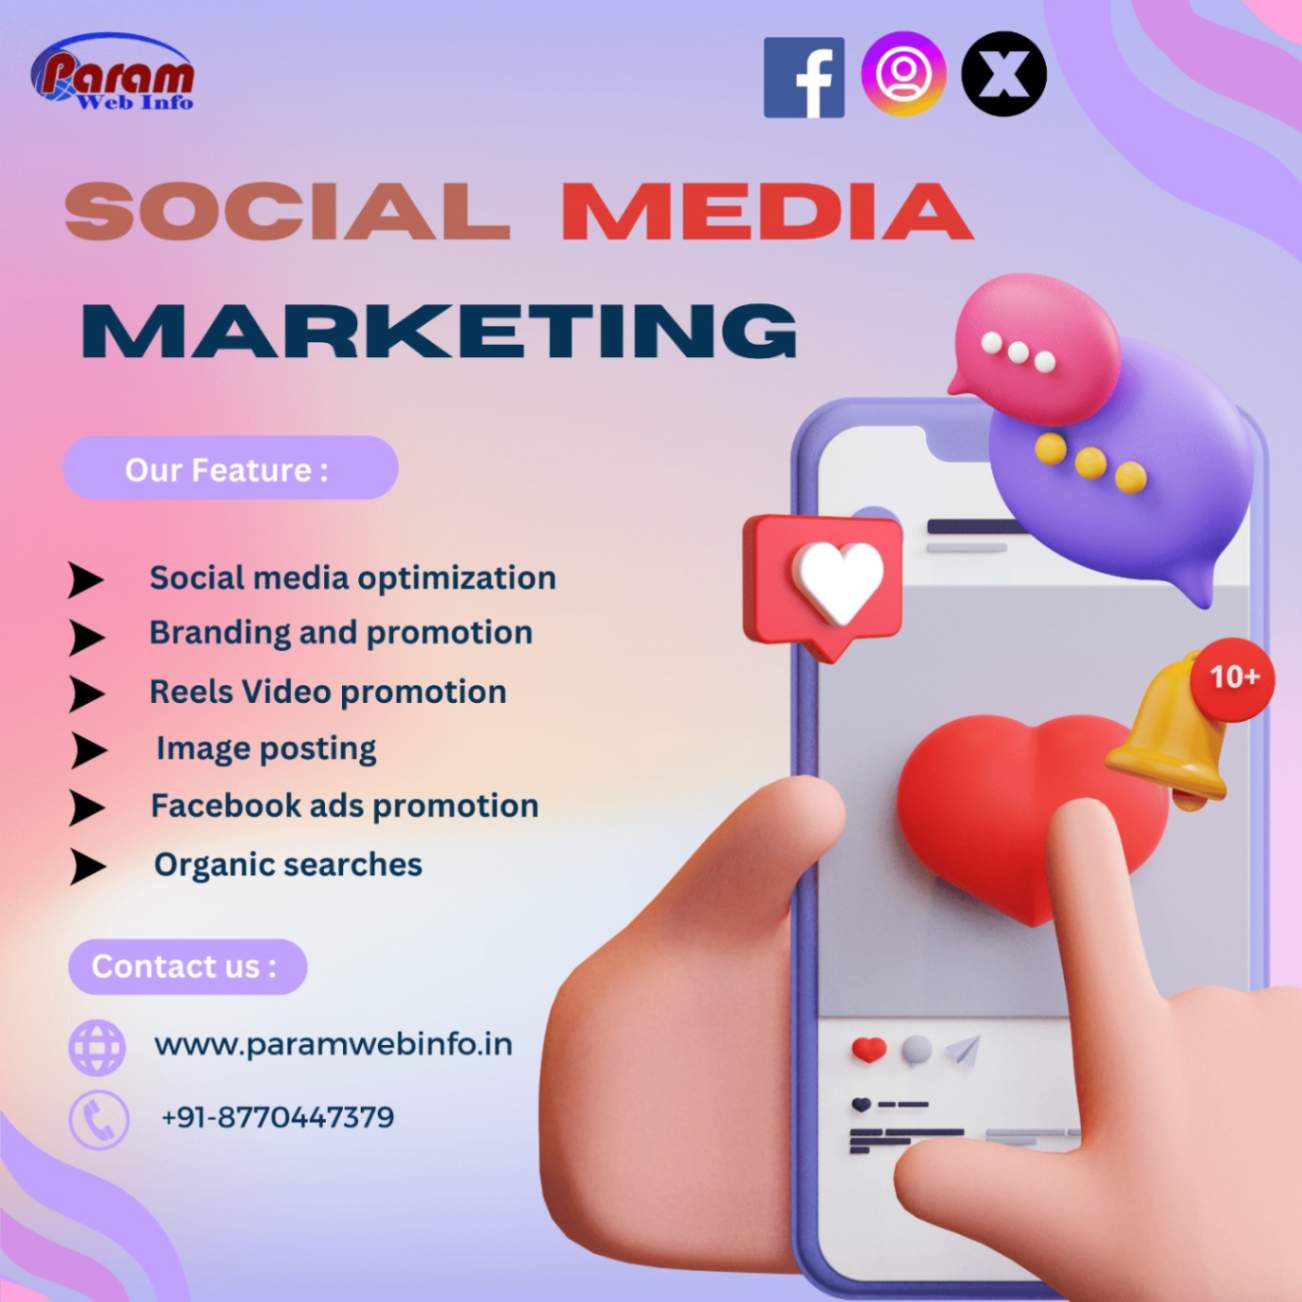 social media marketing features4.jpeg